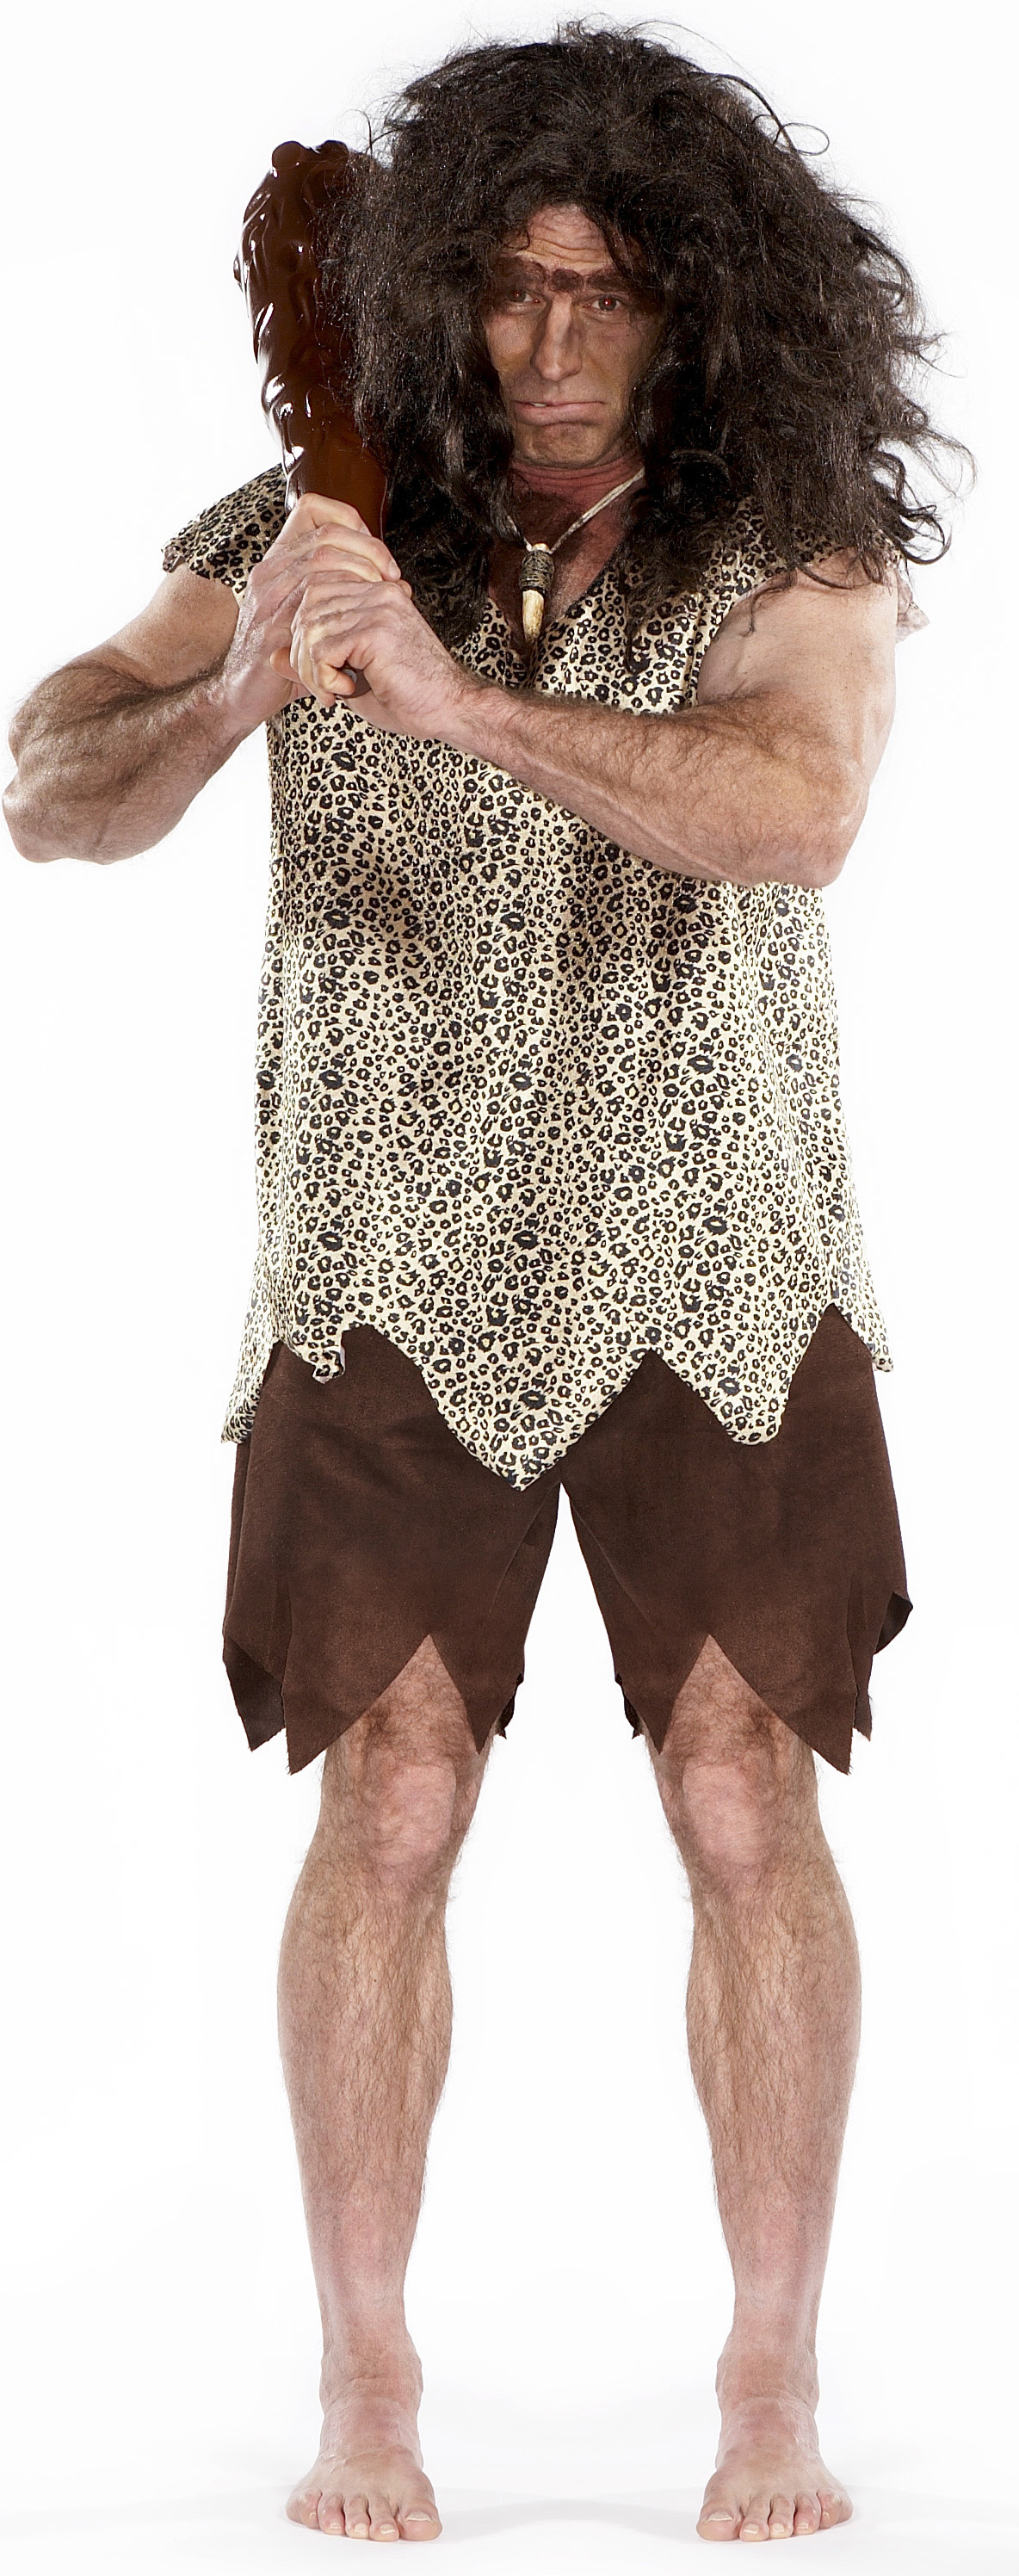 AMC Men's Caveman Adult Costume - One-Size